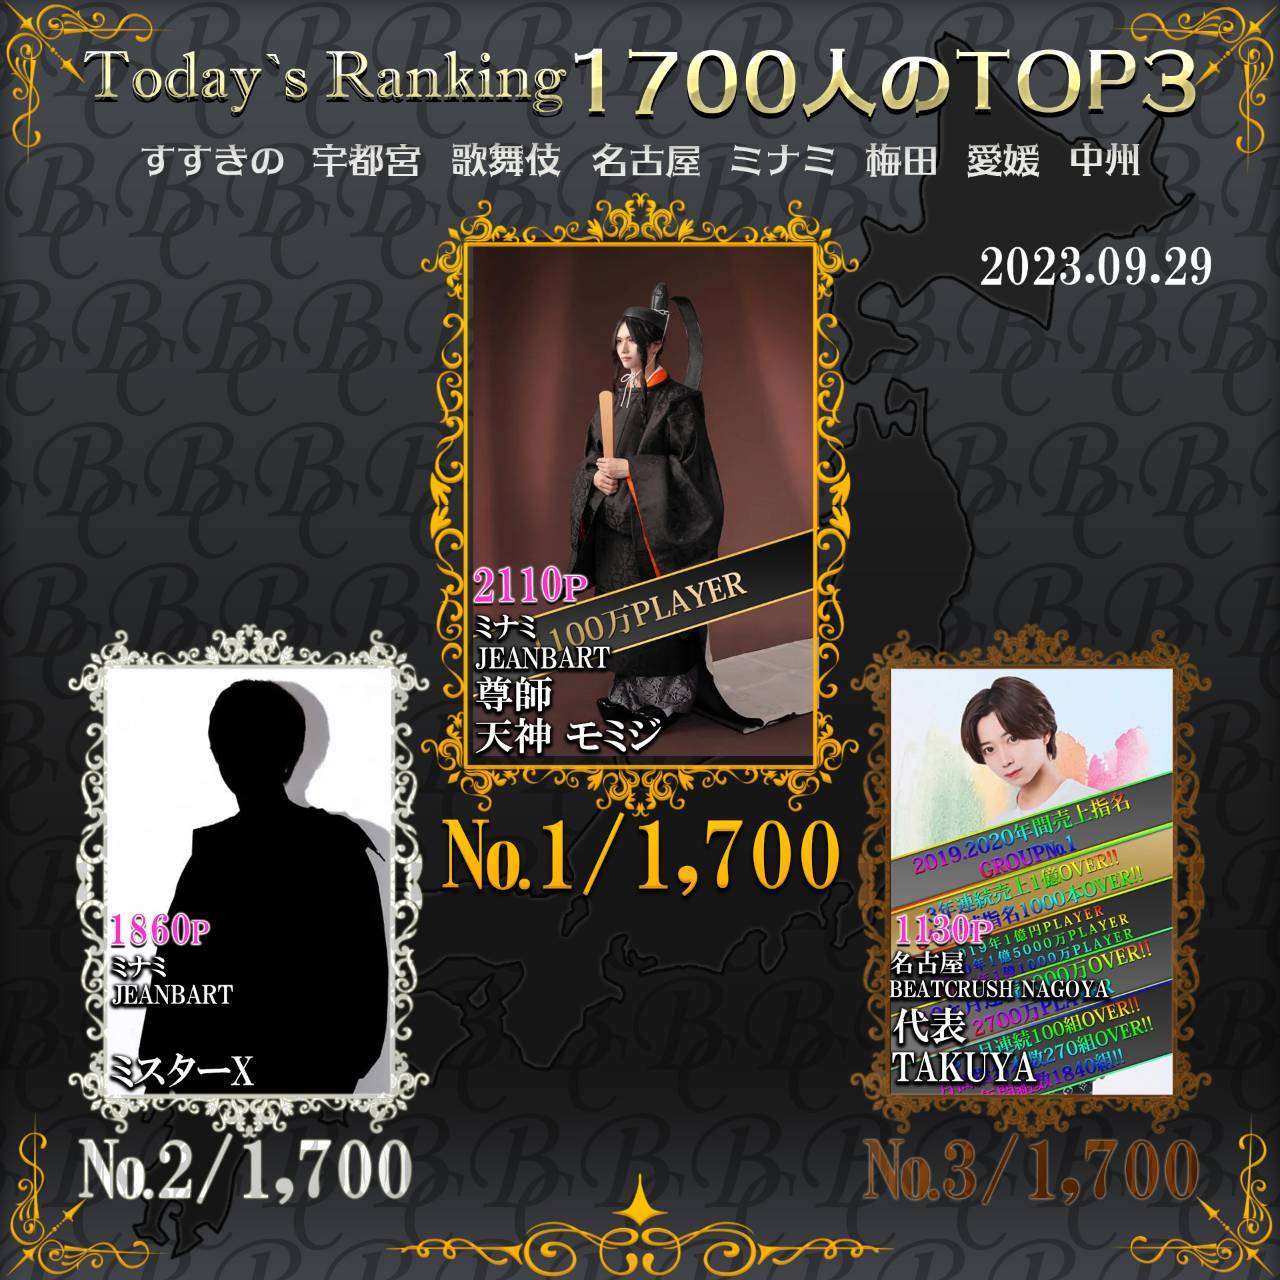 9/29 Today’s Ranking